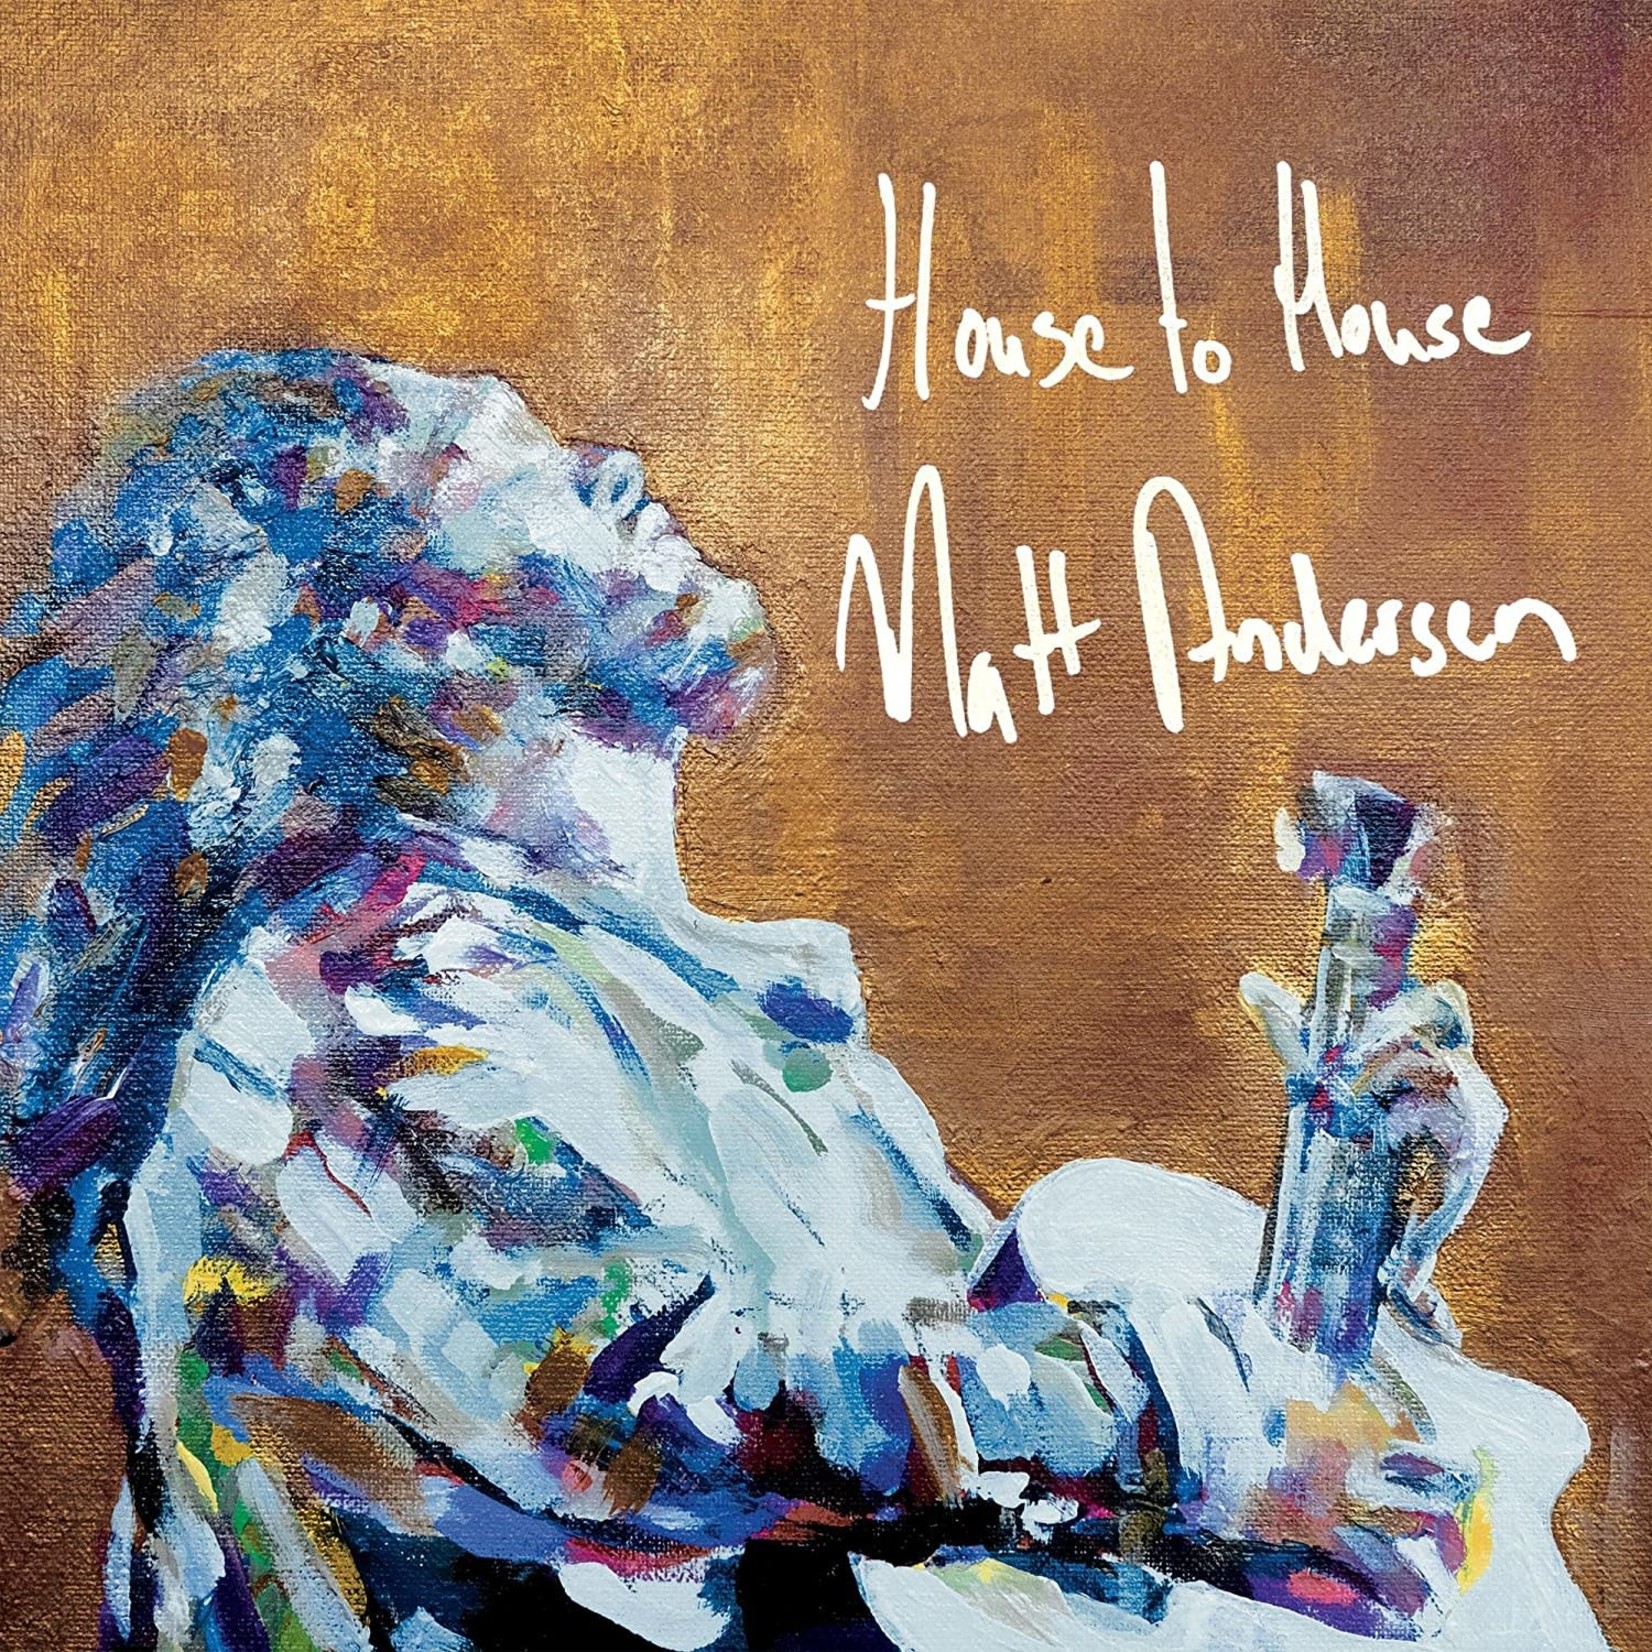 Matt Andersen - House To House [CD]